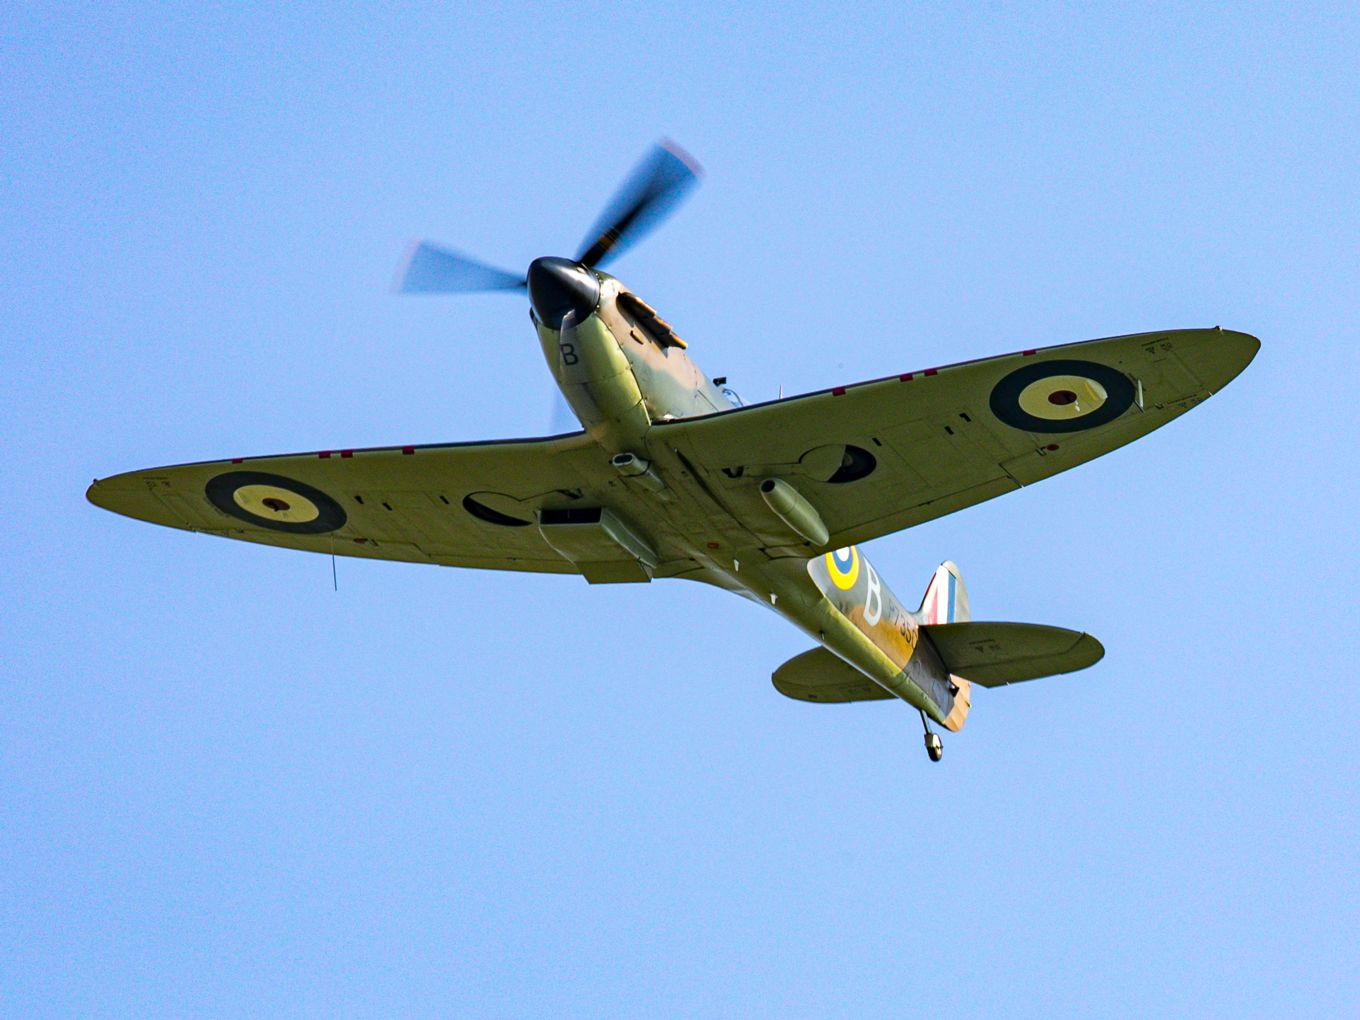 Image shows RAF spitfire flying with blue sky